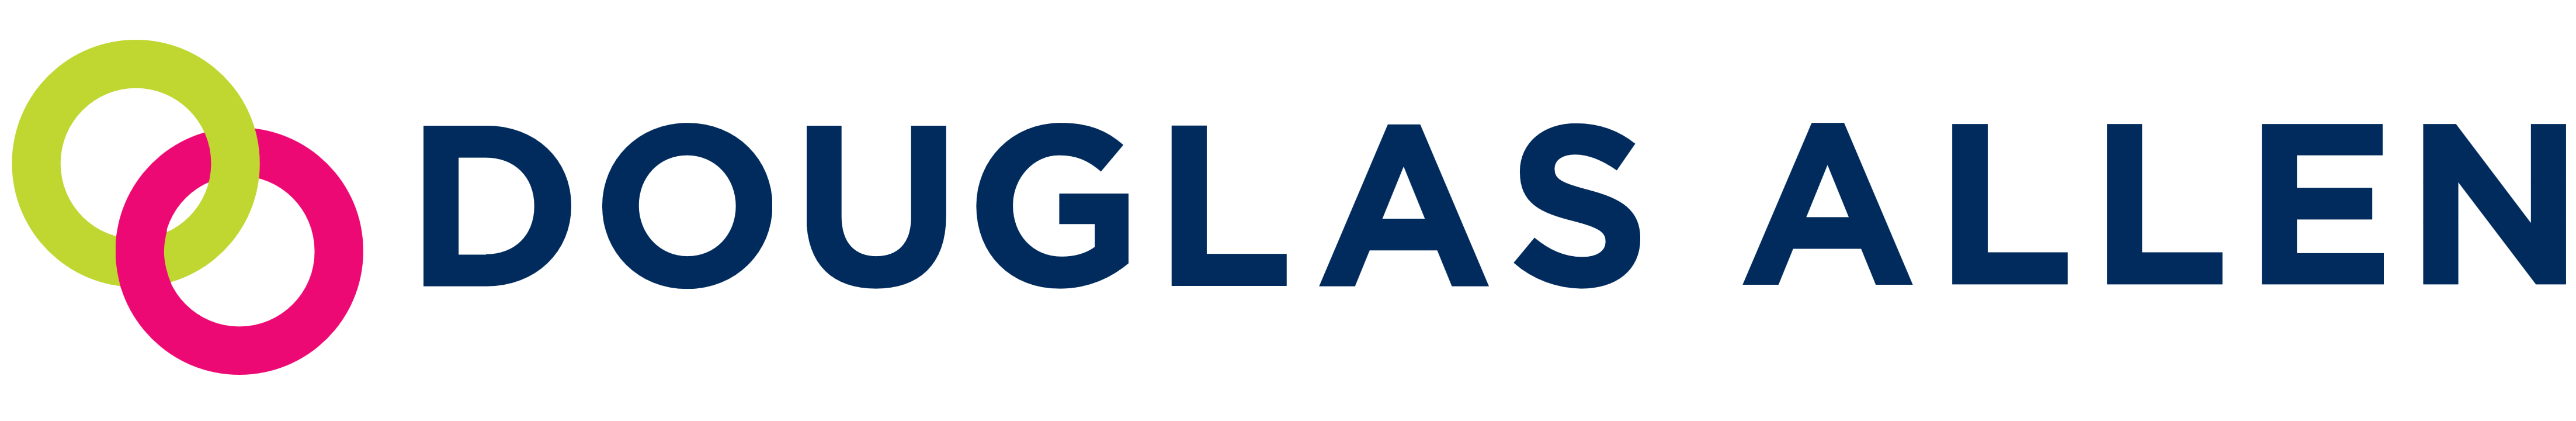 Douglas Allen logo, logotype